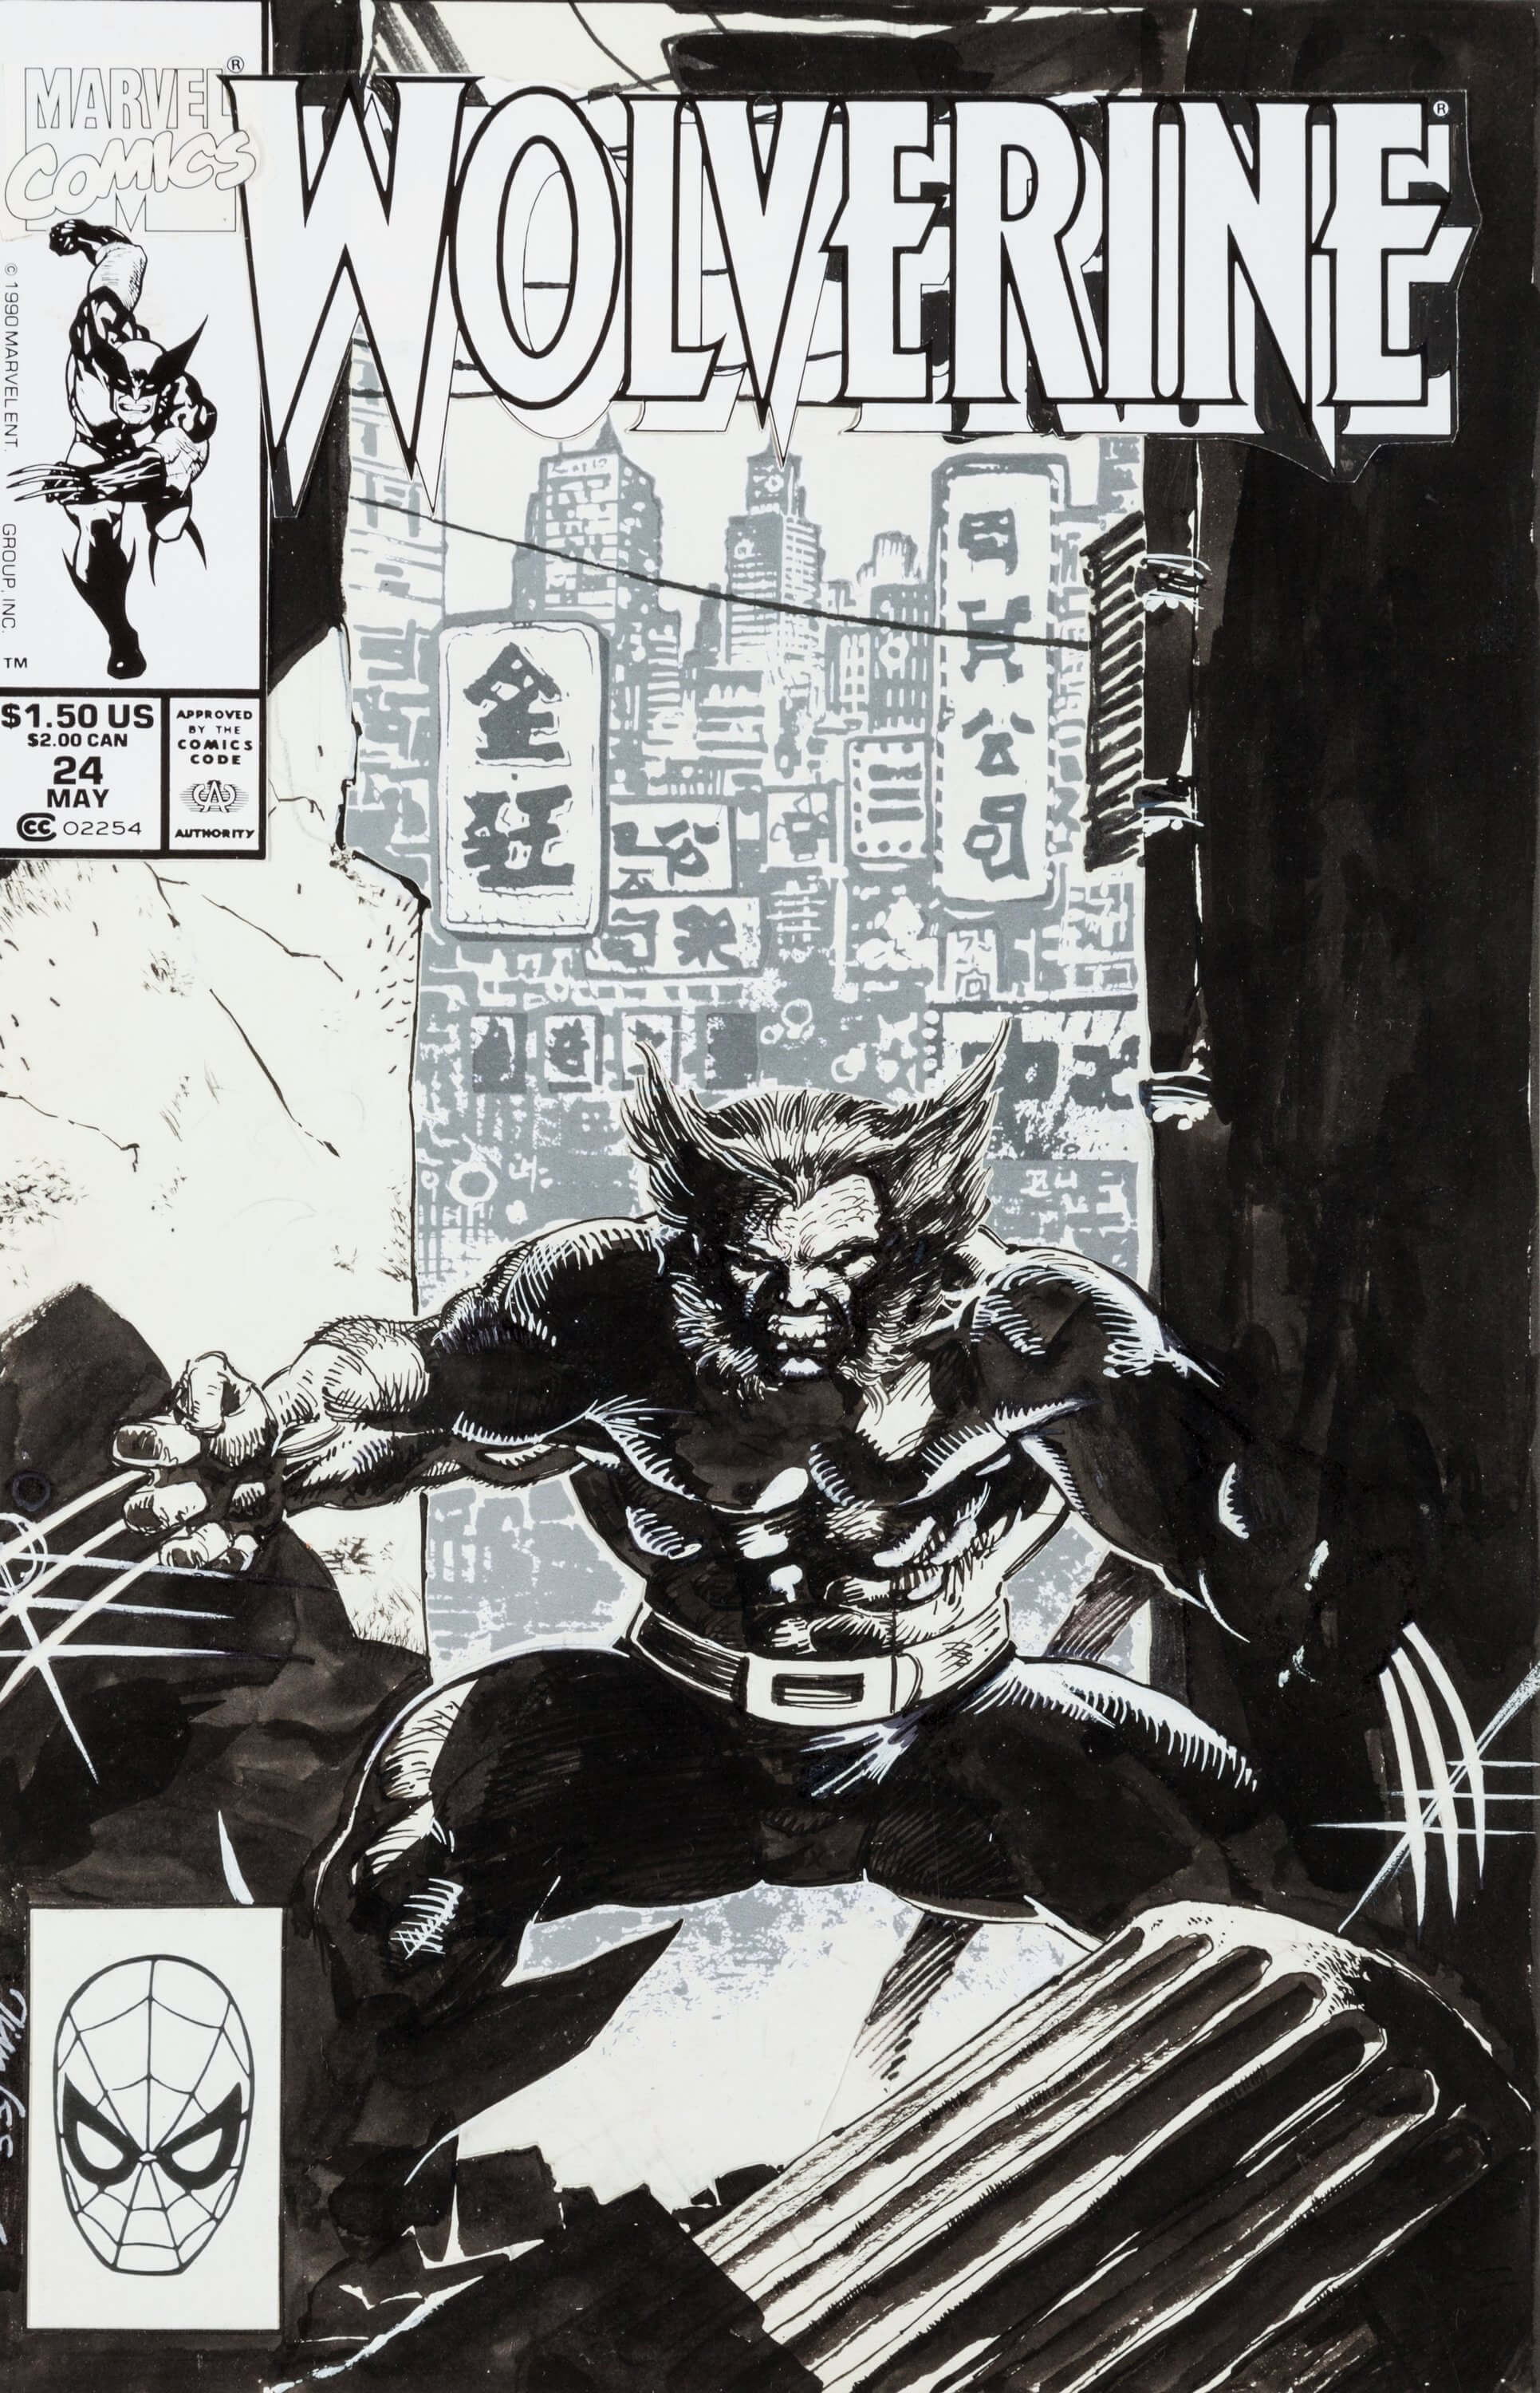 Jim Lee Wolverine #24 cover